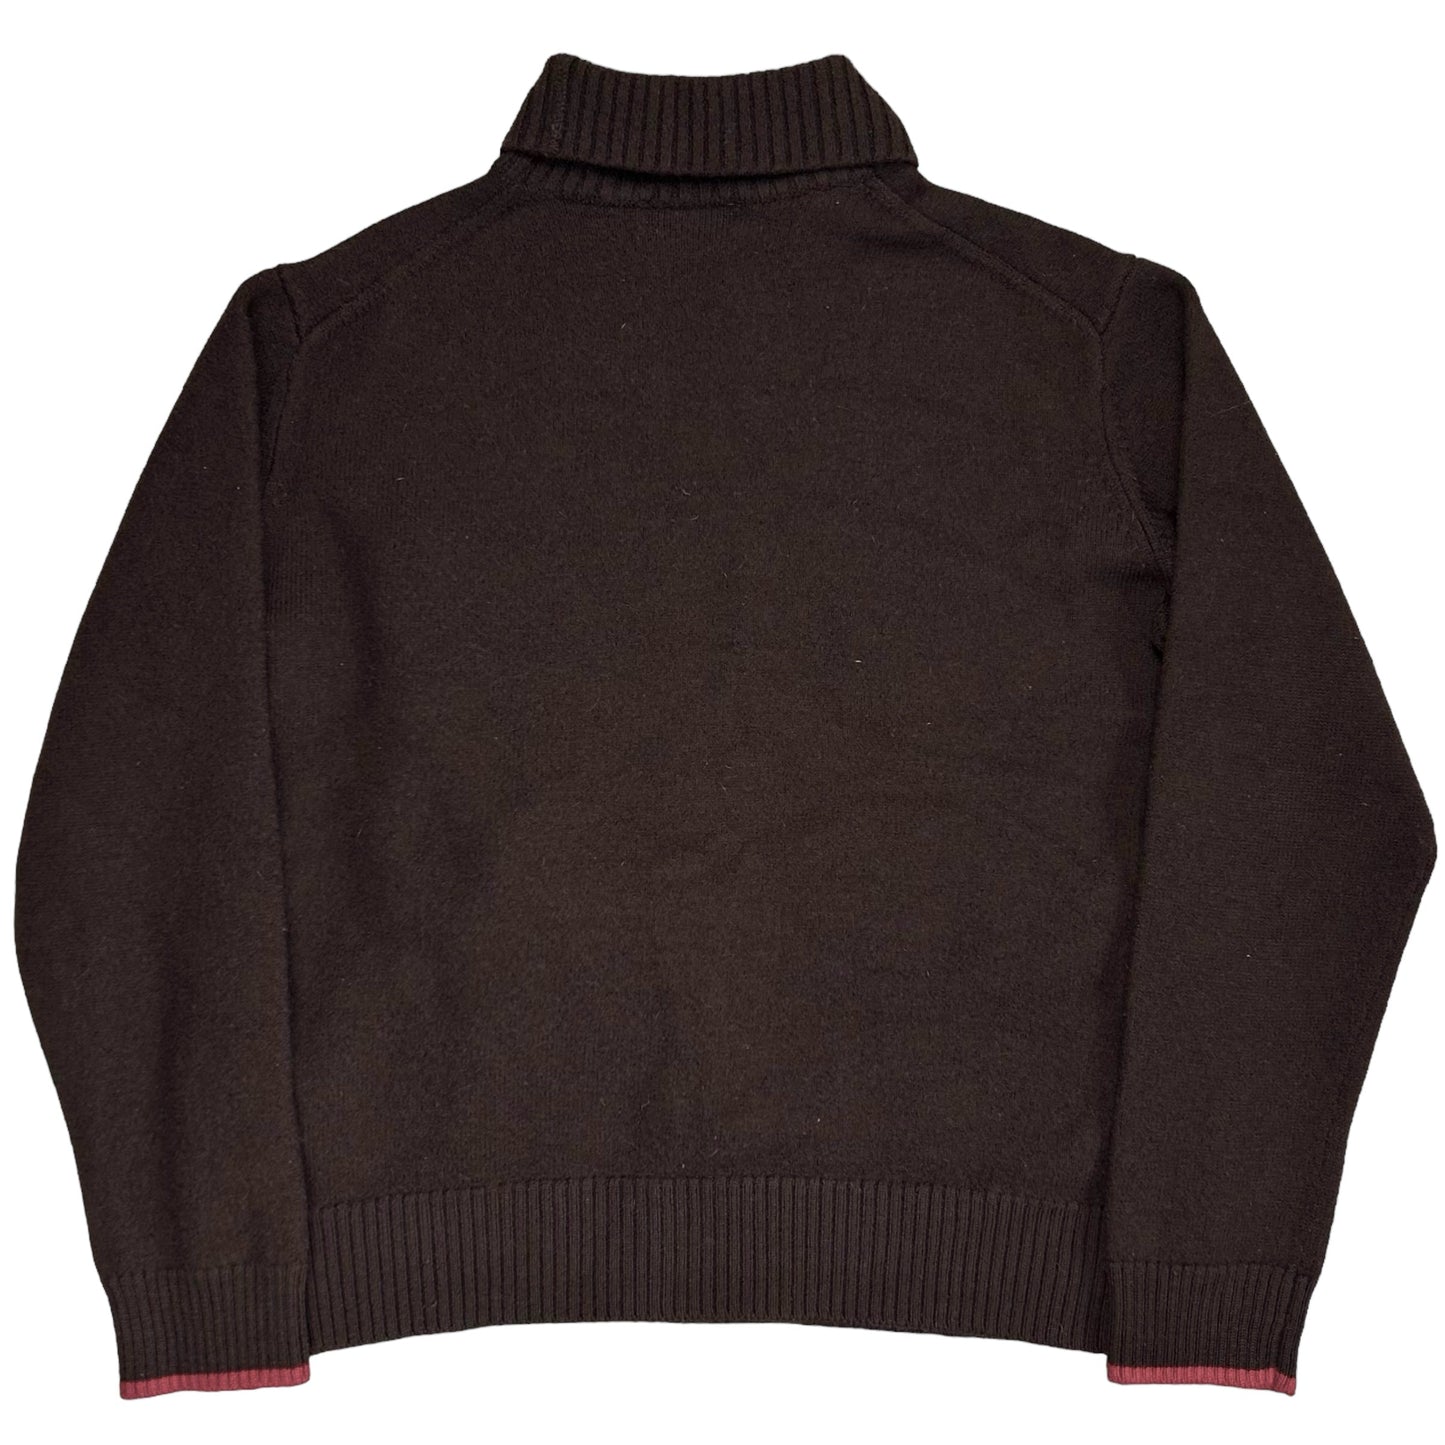 Yohji Yamamoto Pour Homme Arrow Turtleneck Knit Sweater - AW05